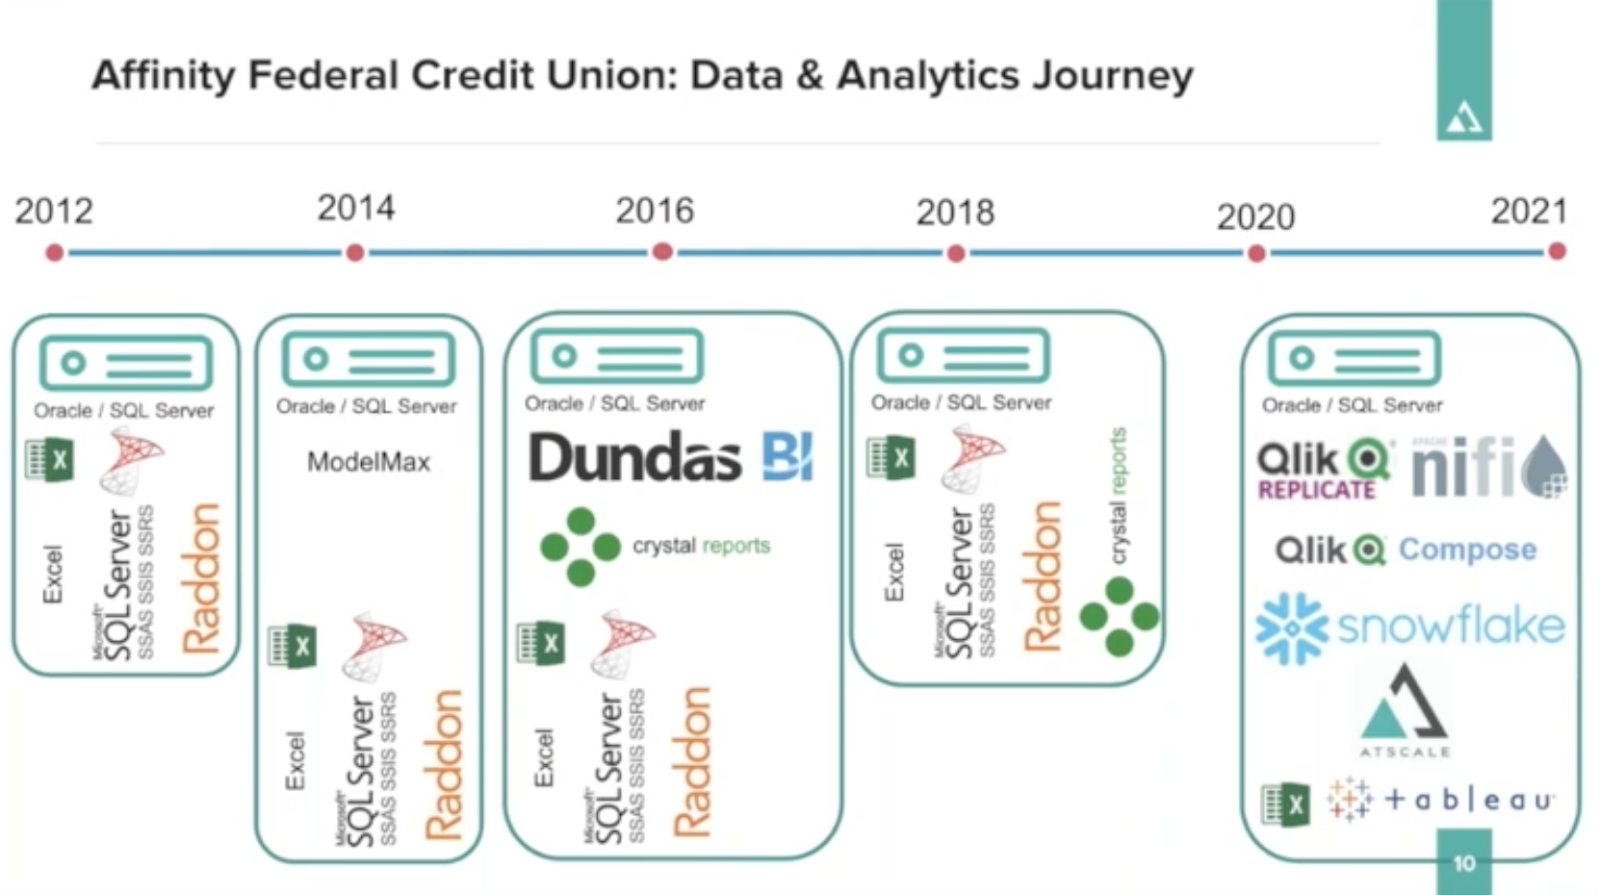 Affinity Federal Credit Union Data & Analytics Journey